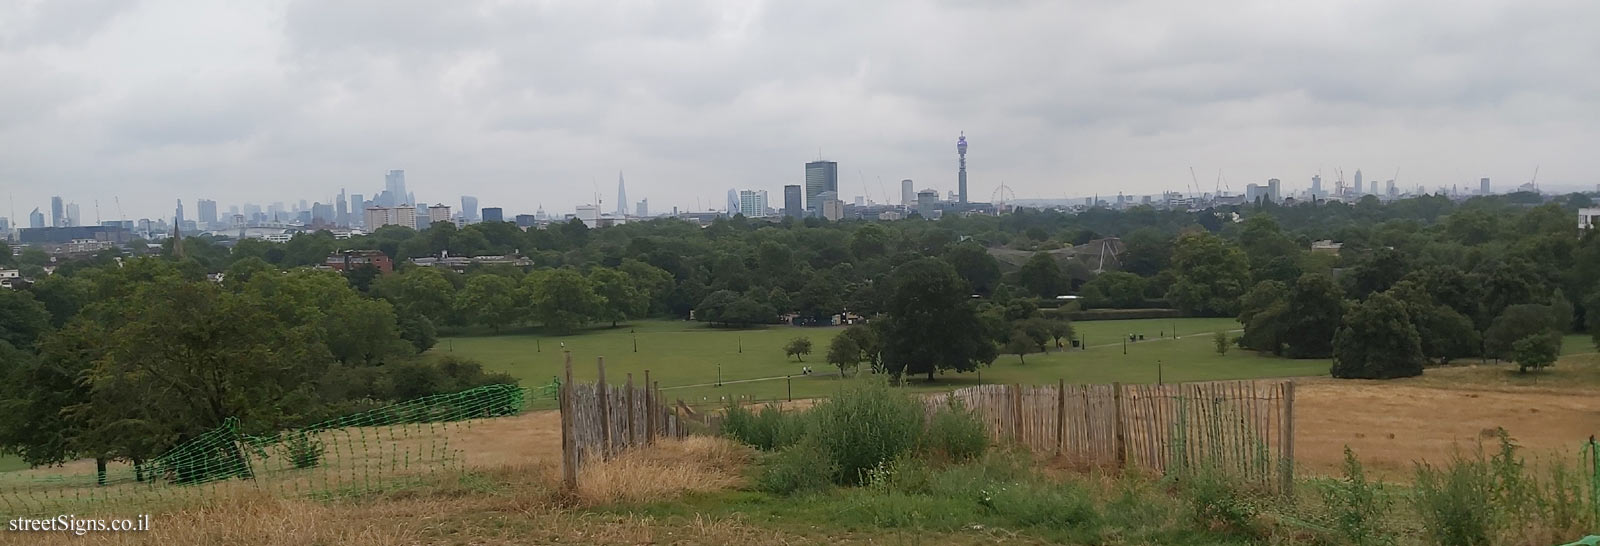 London - Primrose Hill - Viewpoint of London